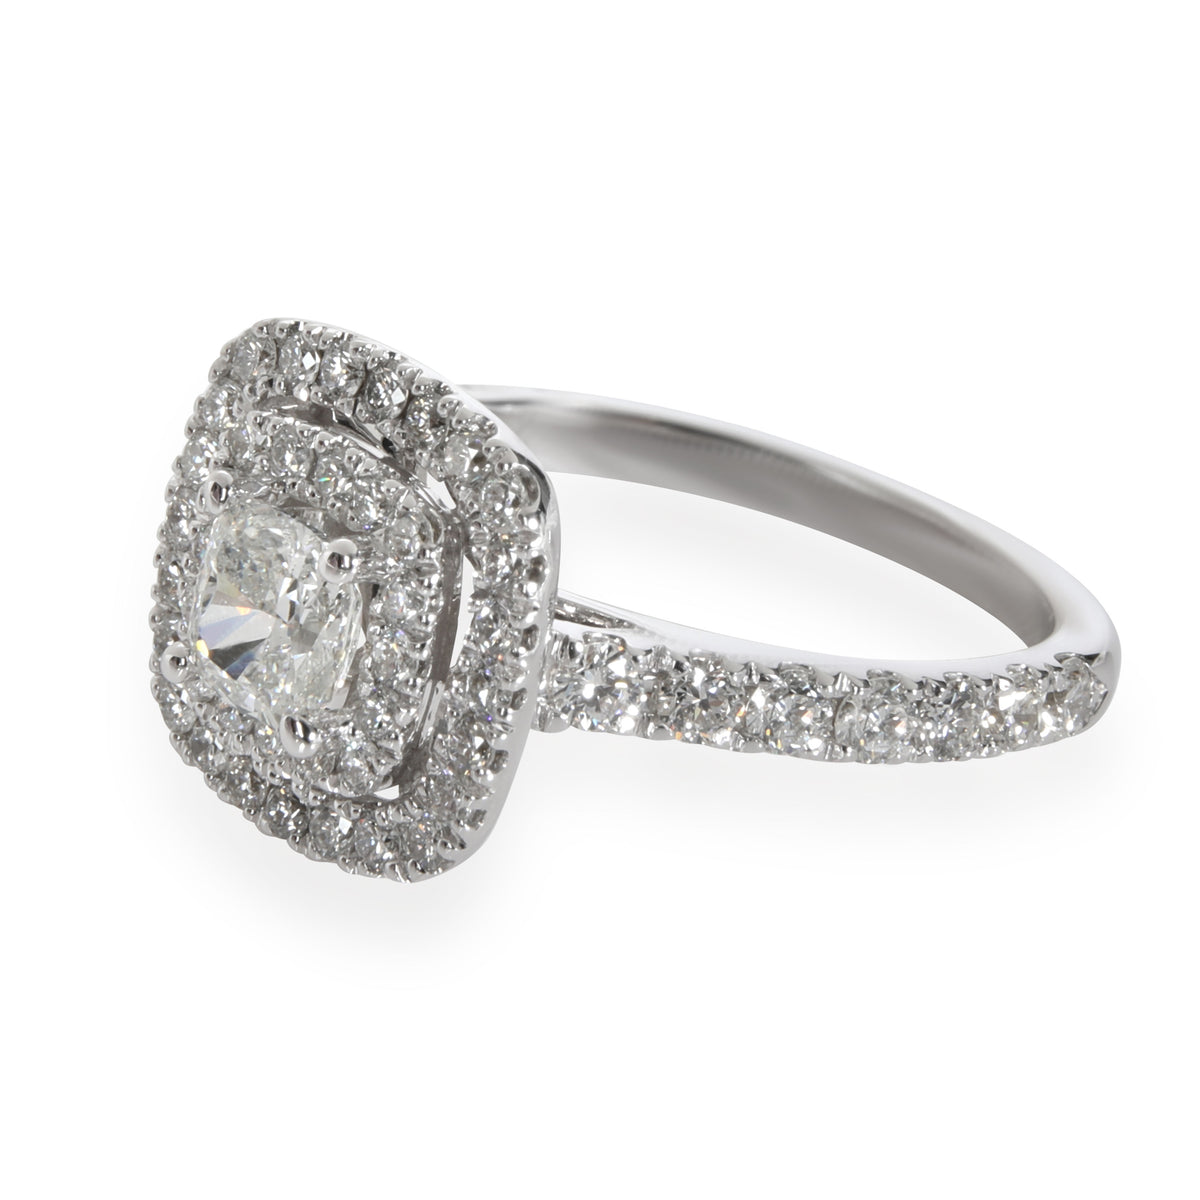 Neil Lane Cushion Halo Diamond Engagement Ring in 14K White Gold 1.13 CTW